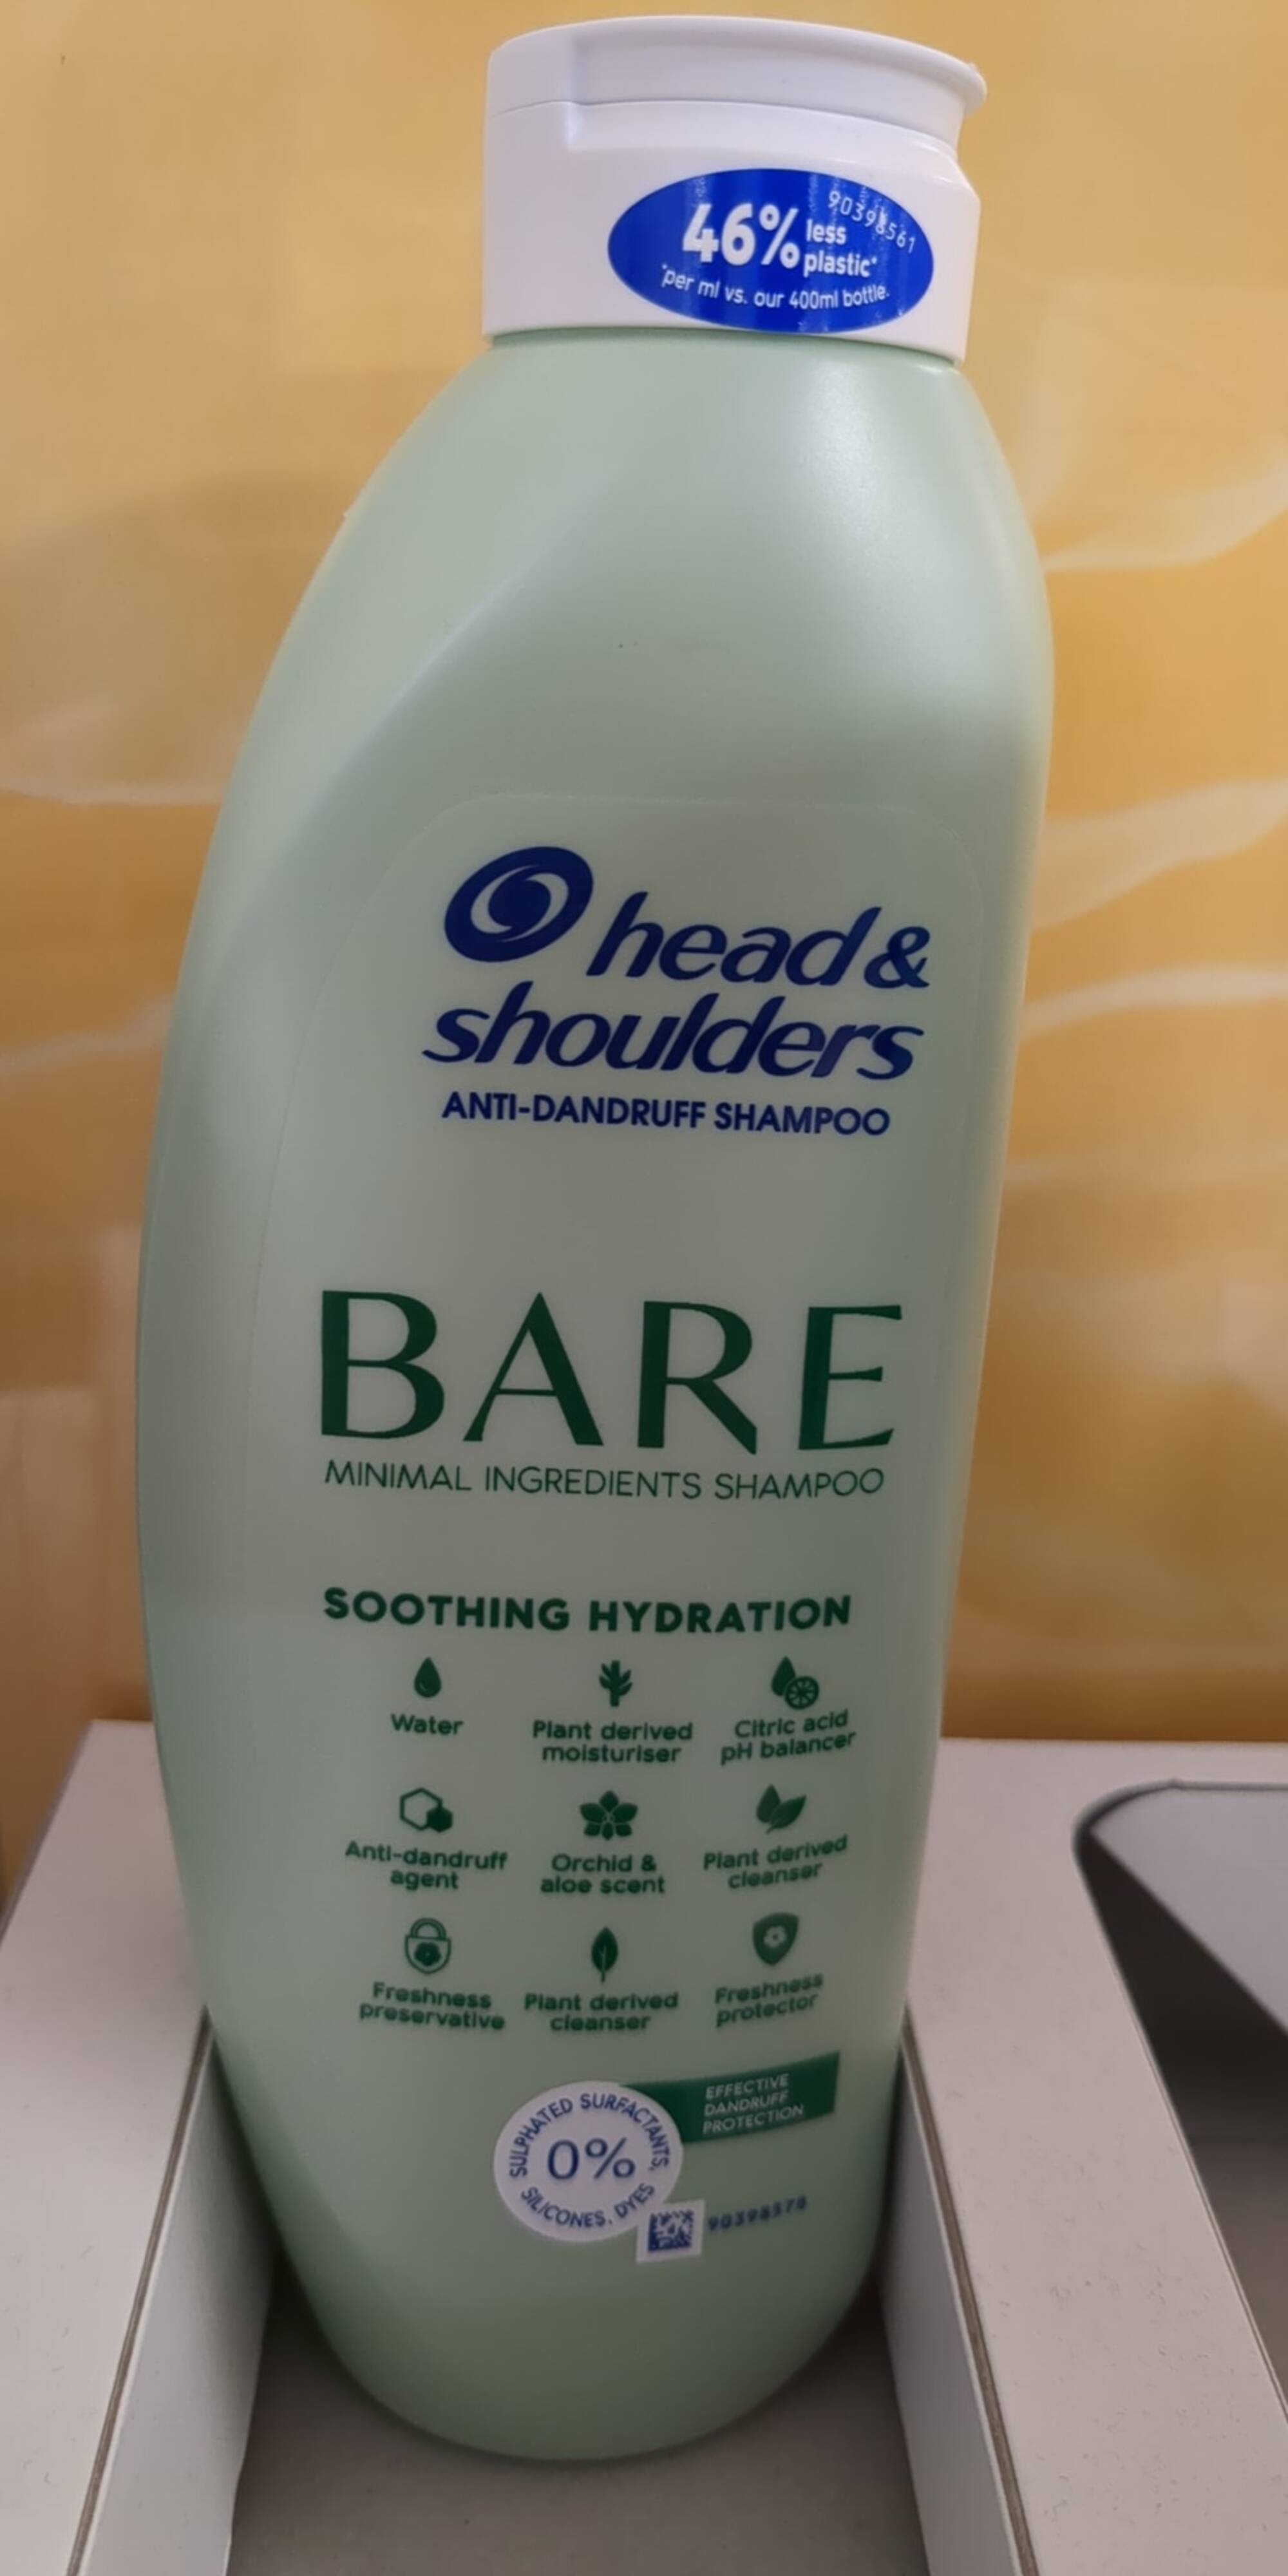 HEAD & SHOULDERS - Bare - minimal ingredient shampoo